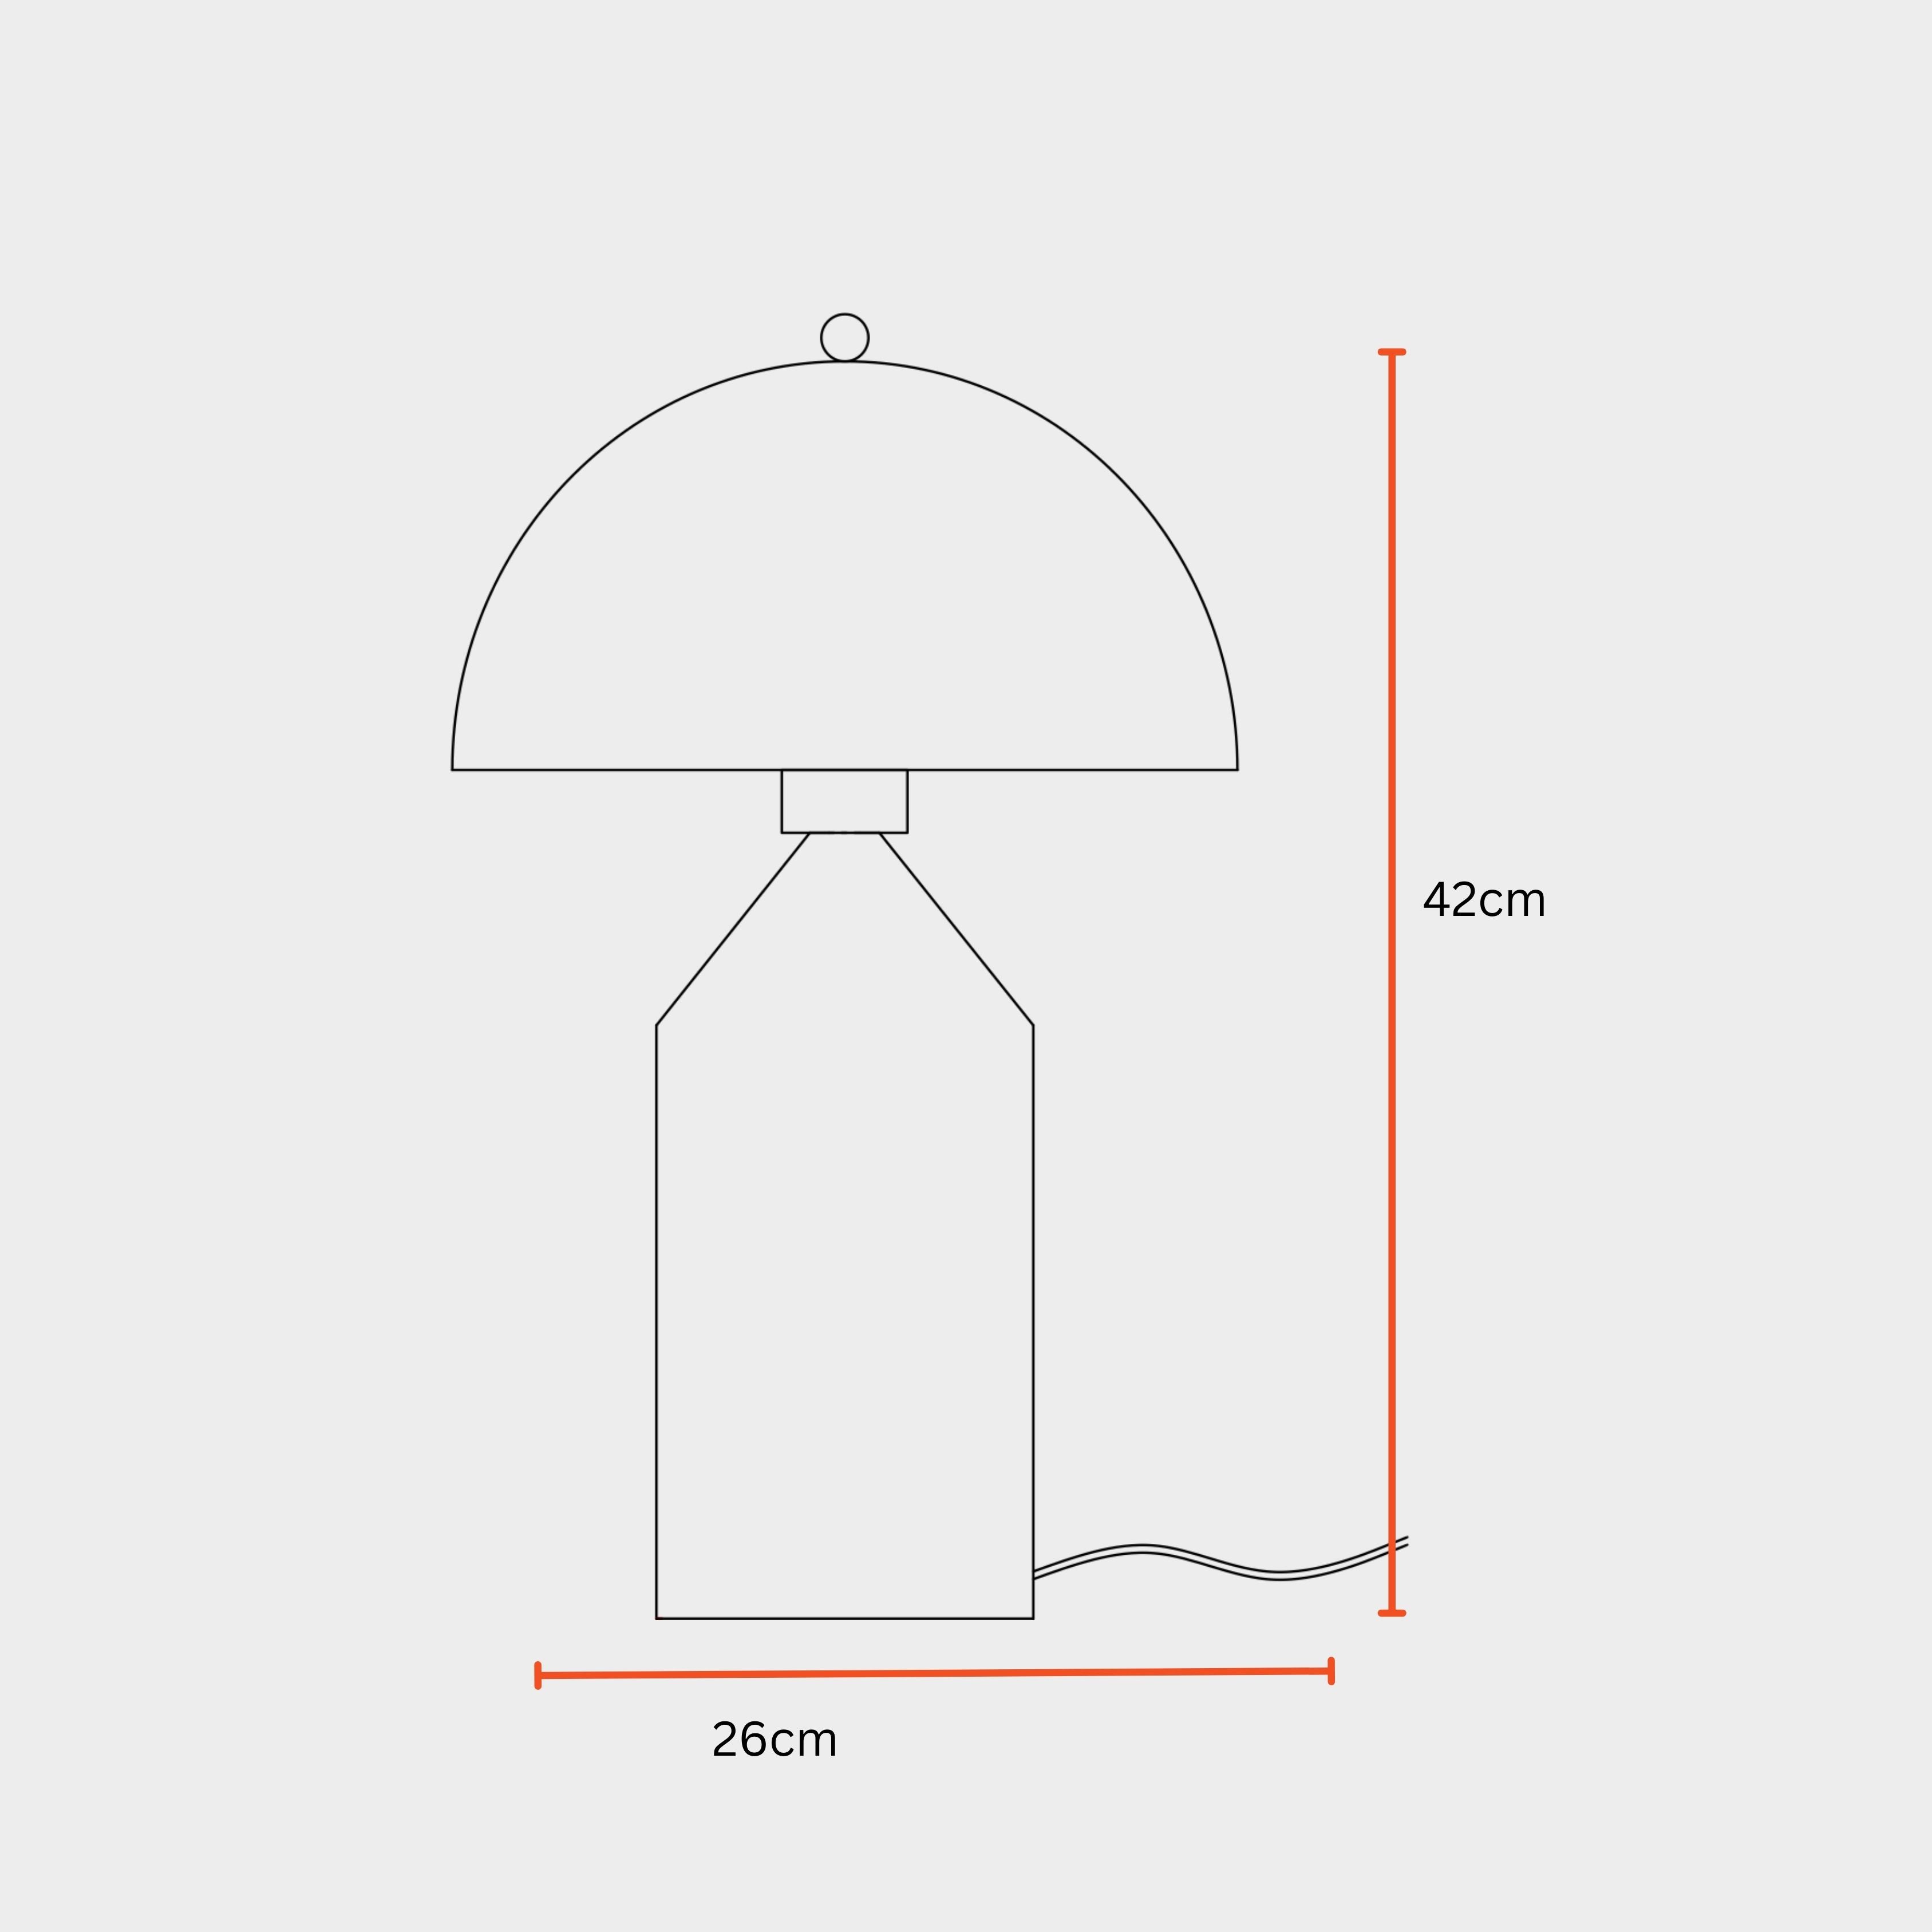 CONE PAGEN - TABLE LAMP - MODERN SCANDINAVIAN DESIGN DESK LAMP, PREMIUM METALLIC FINISH, EASY INSTALLATION